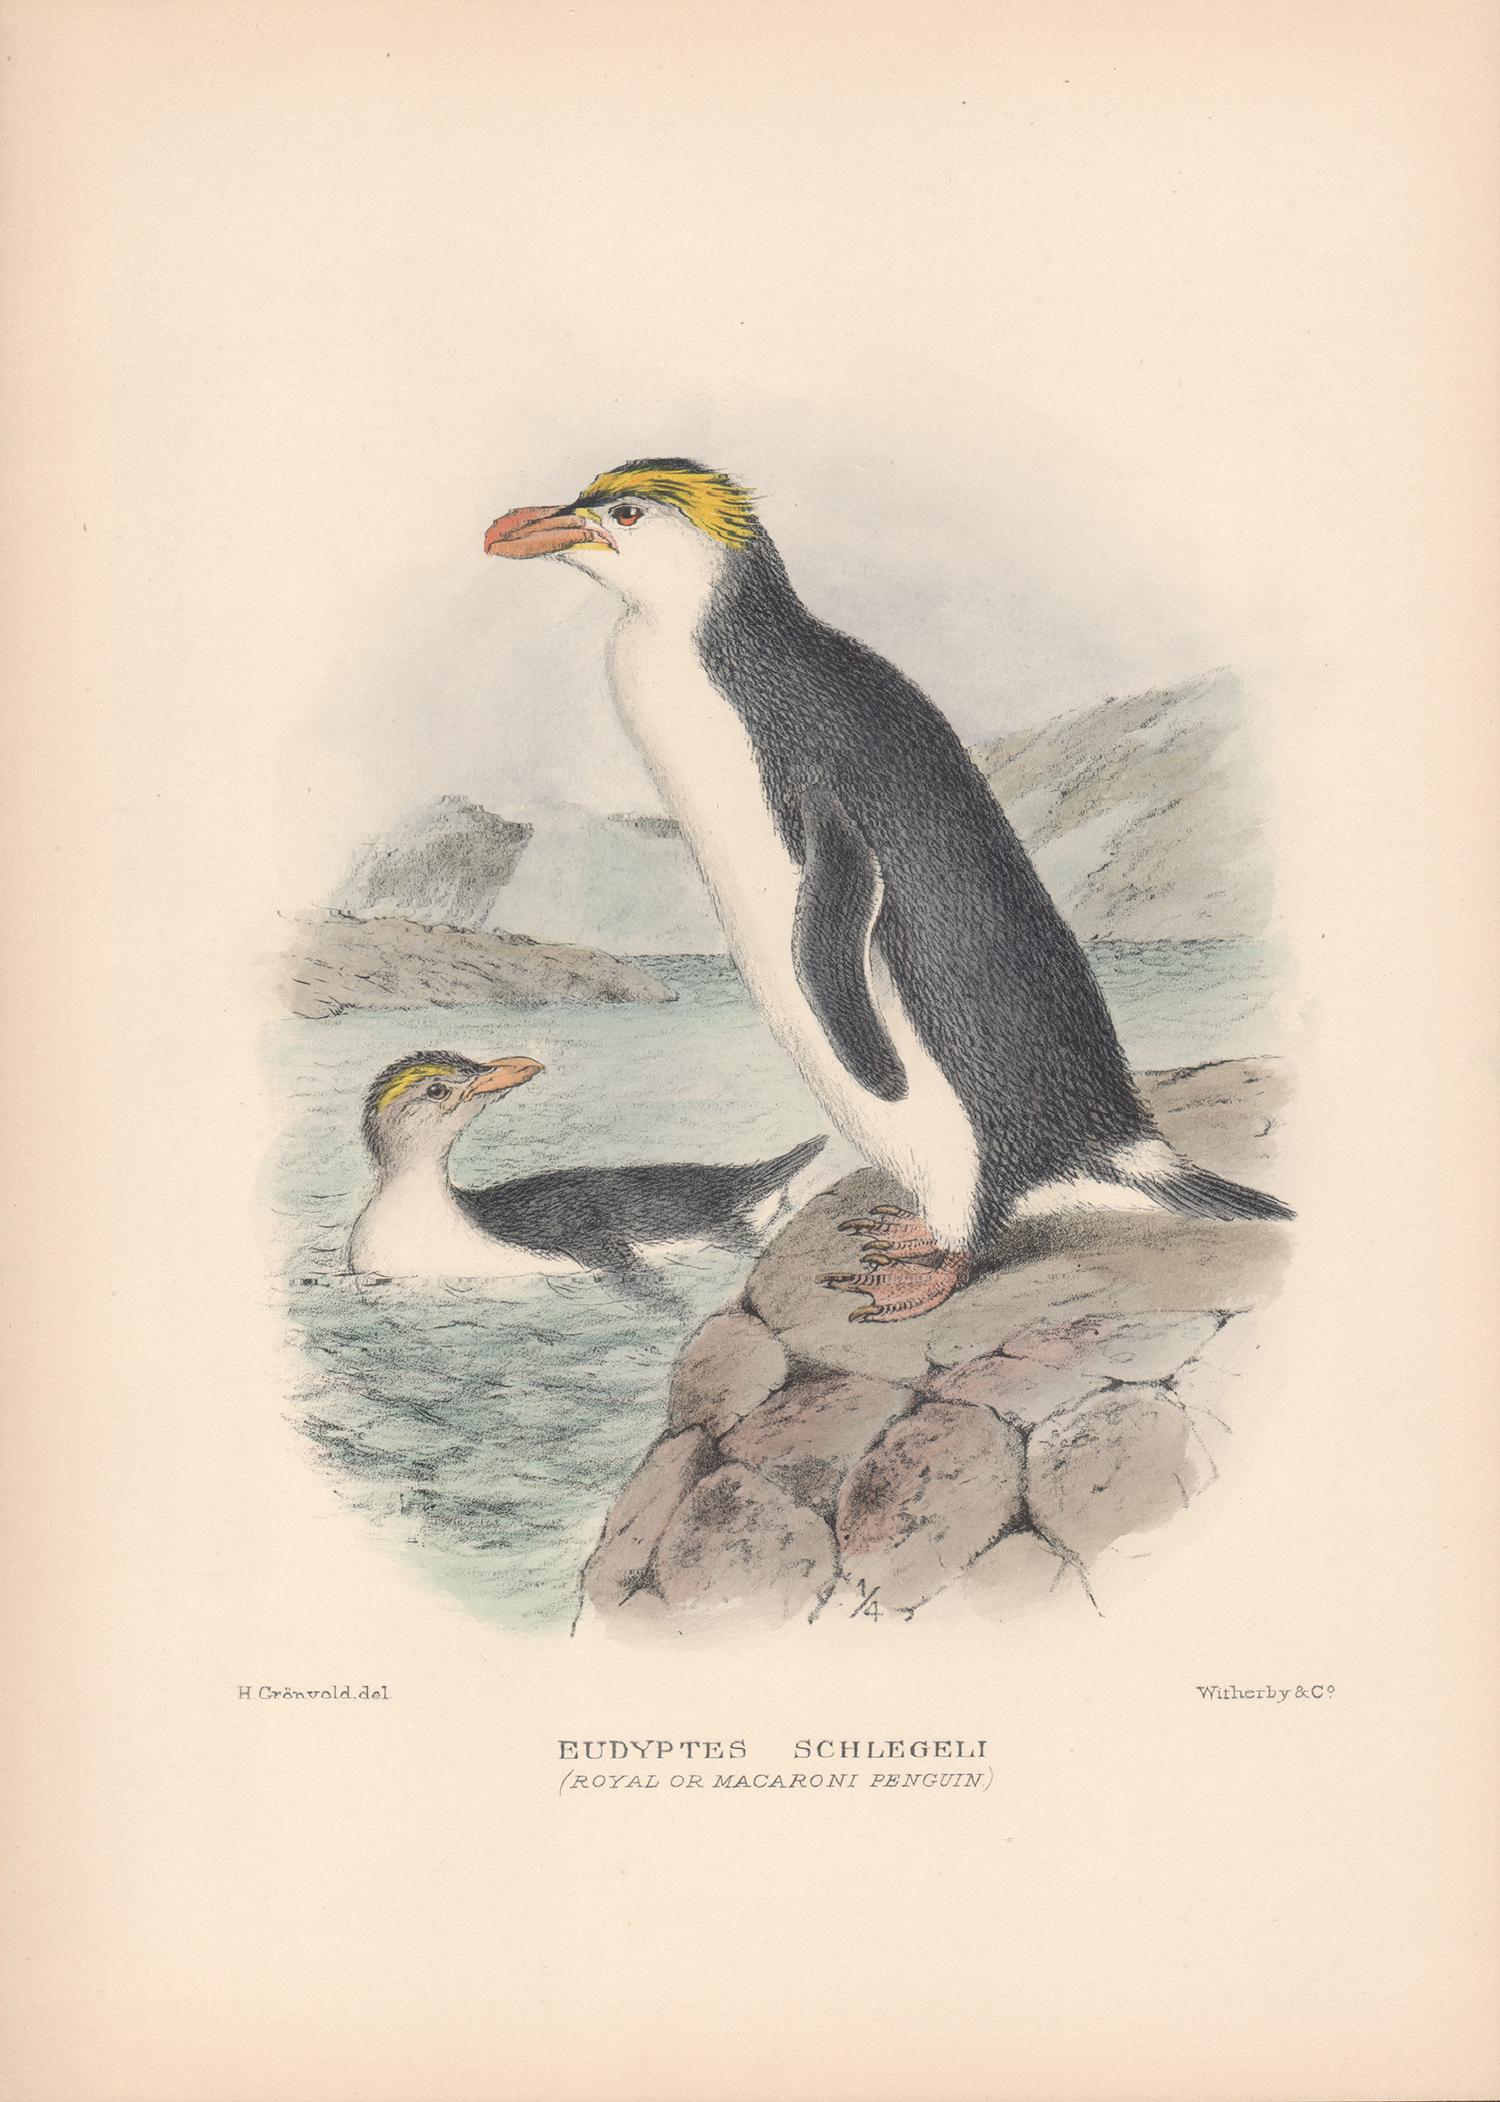 After Henrik Gronvold Animal Print - Royal or Macaroni Penguin, Sea Bird lithograph with hand-colouring, 1928